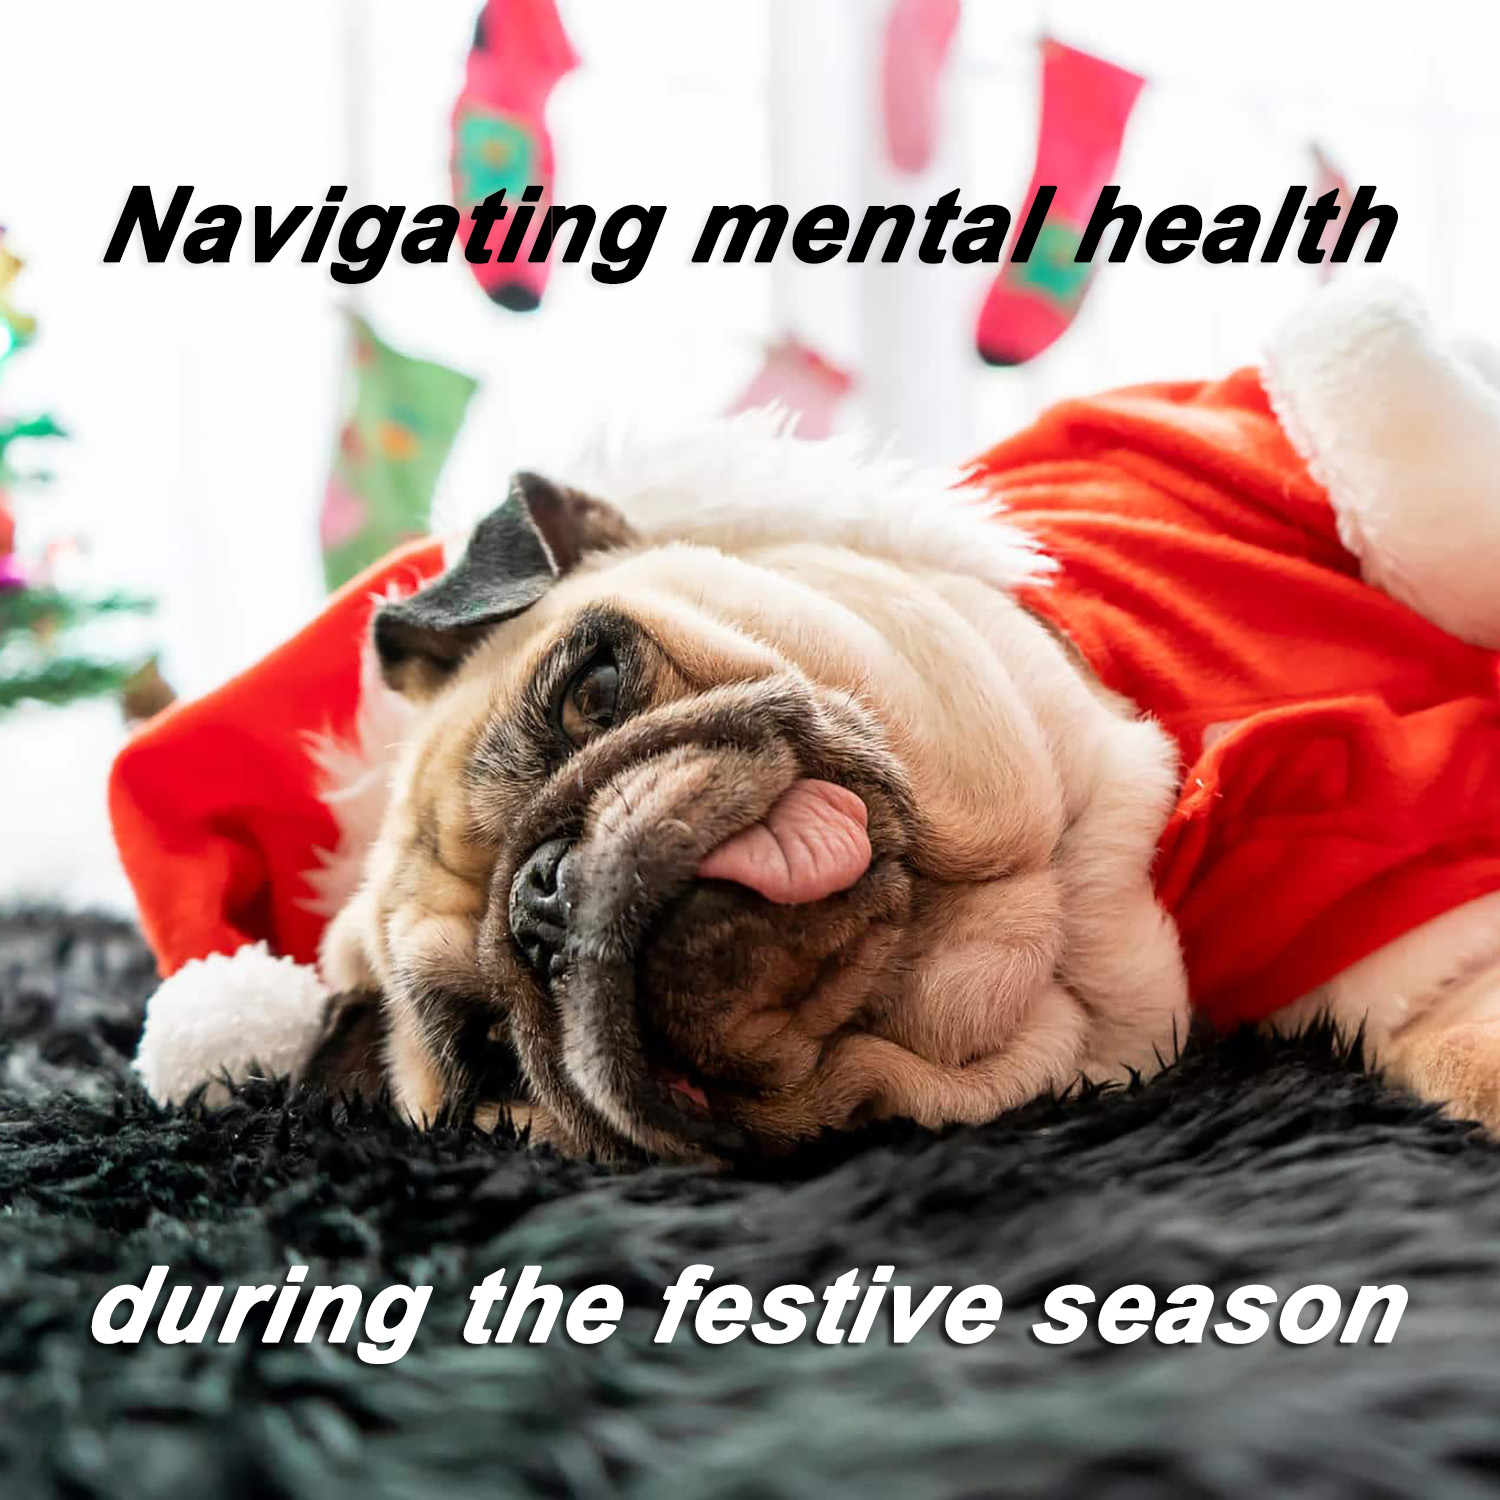 Navigating mental health during the festive season